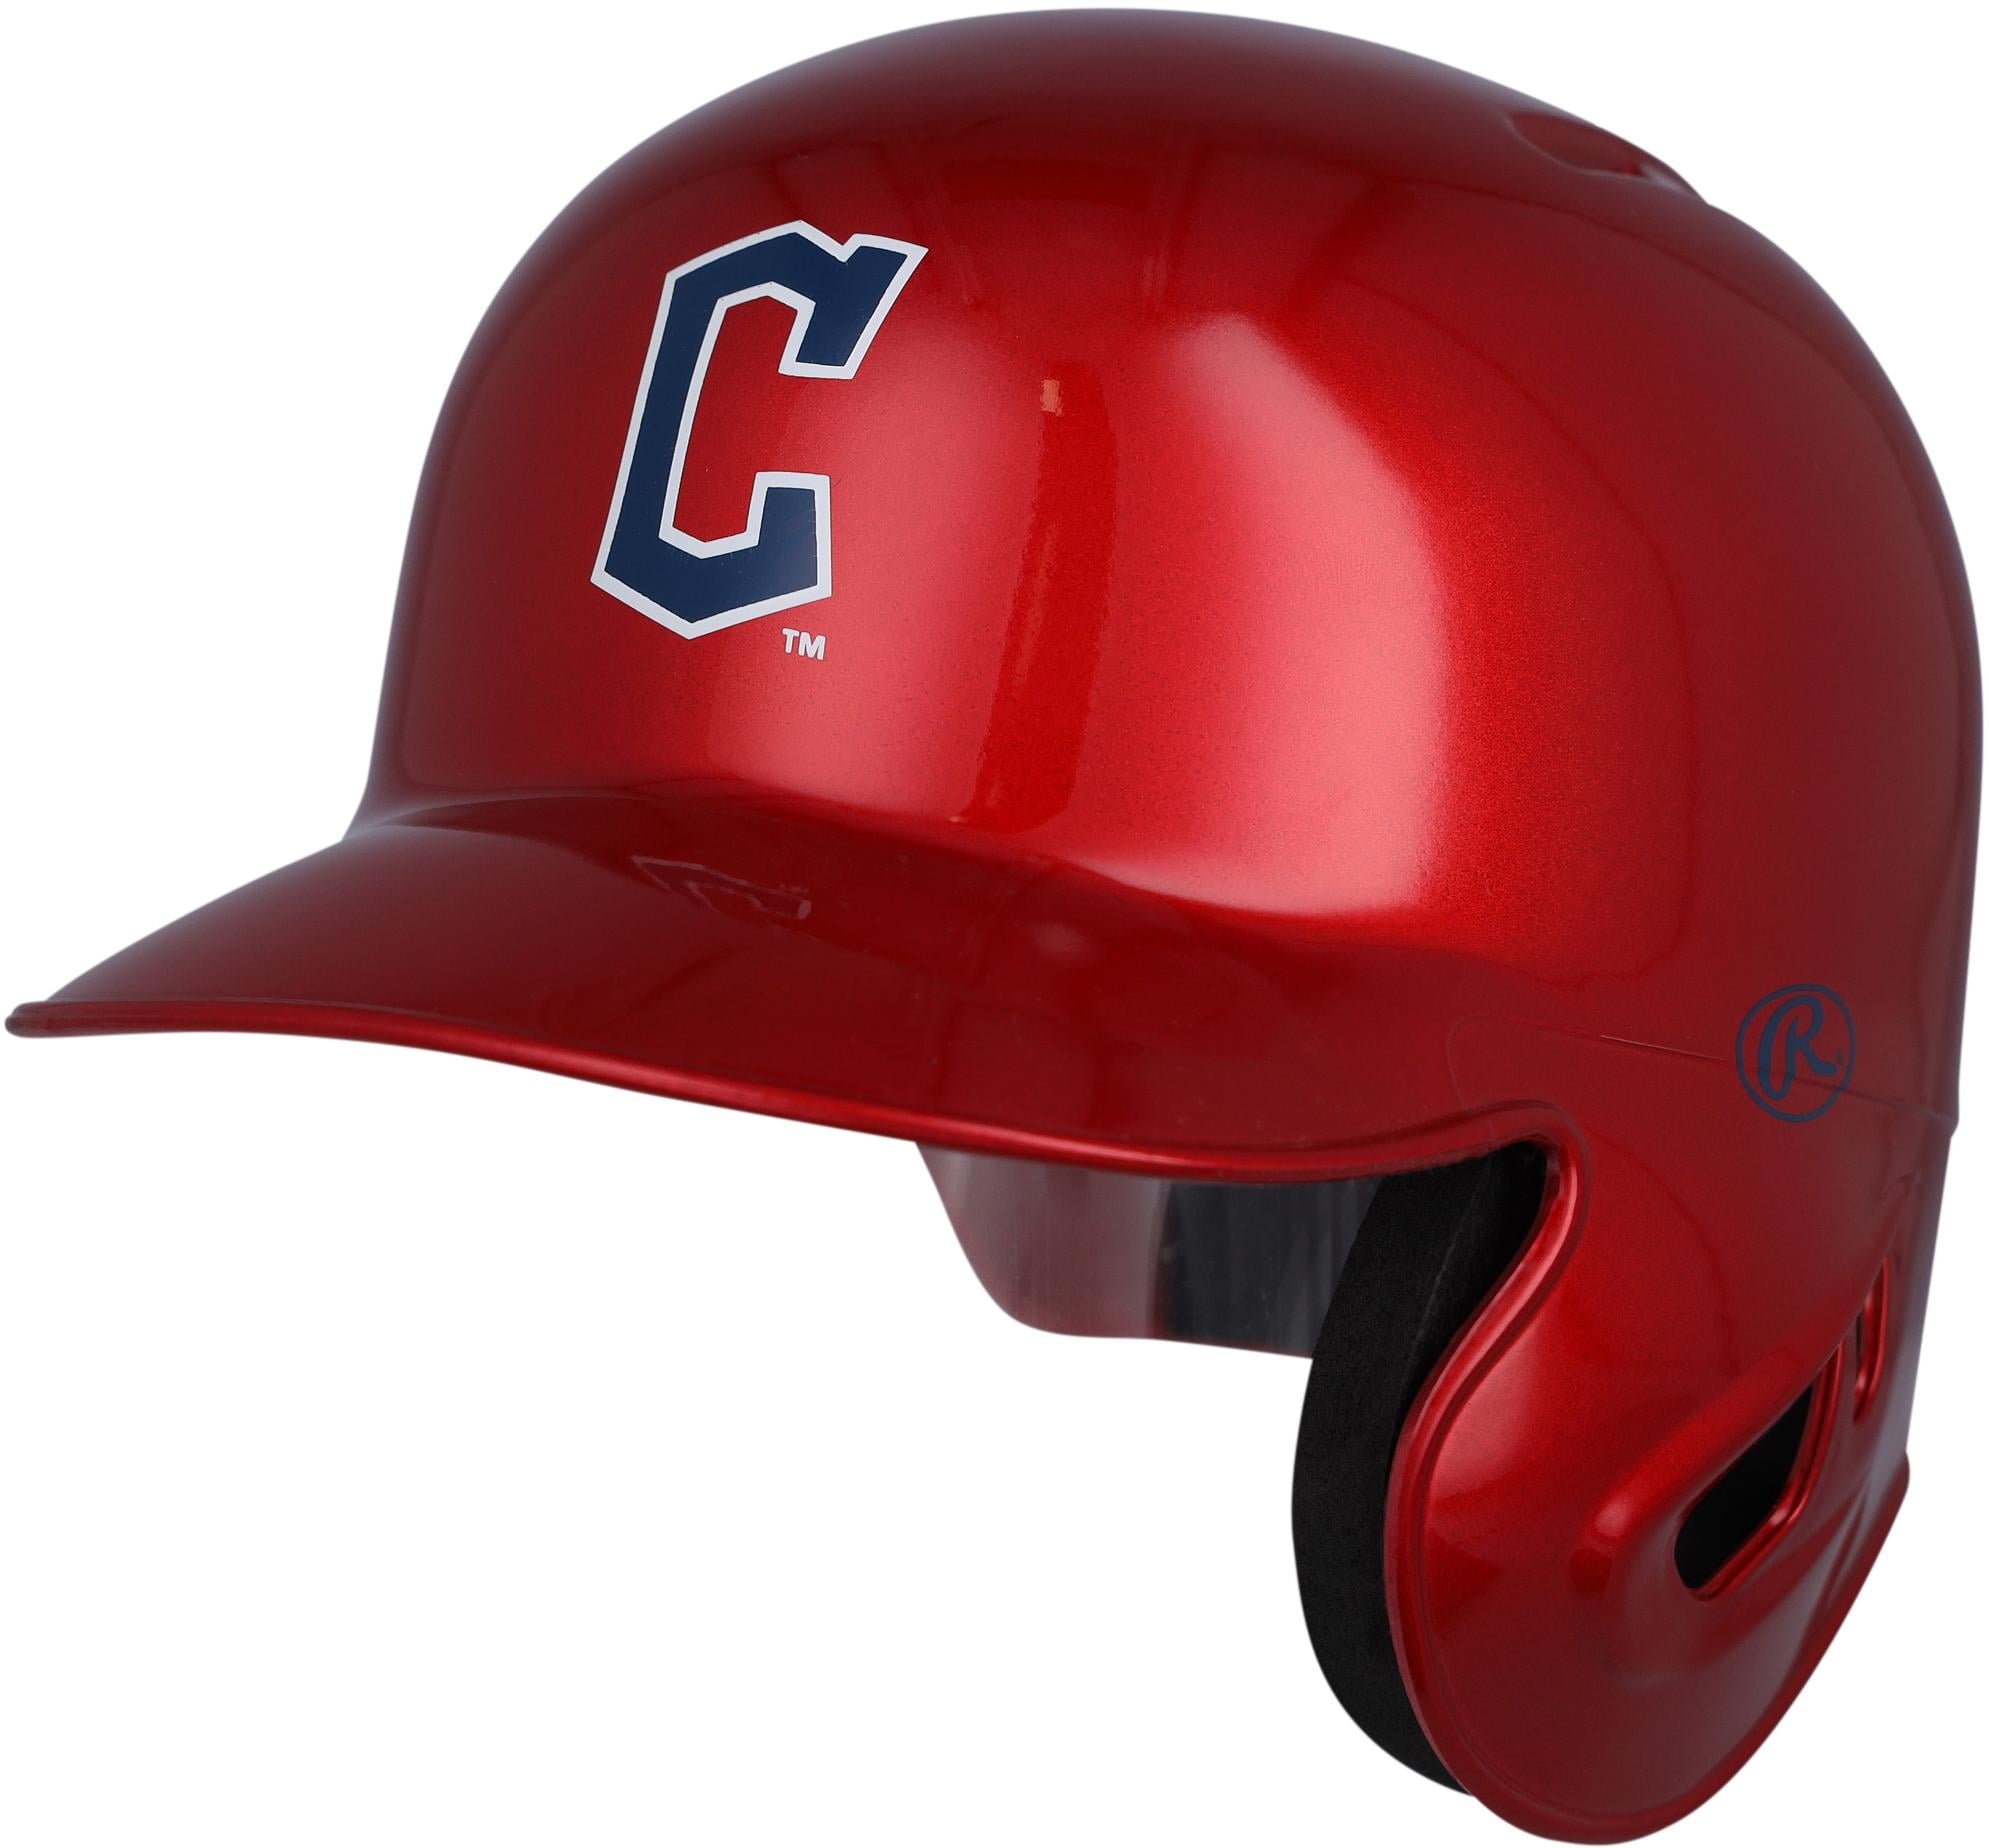 DJ LeMahieu New York Yankees Autographed Mini Batting Helmet